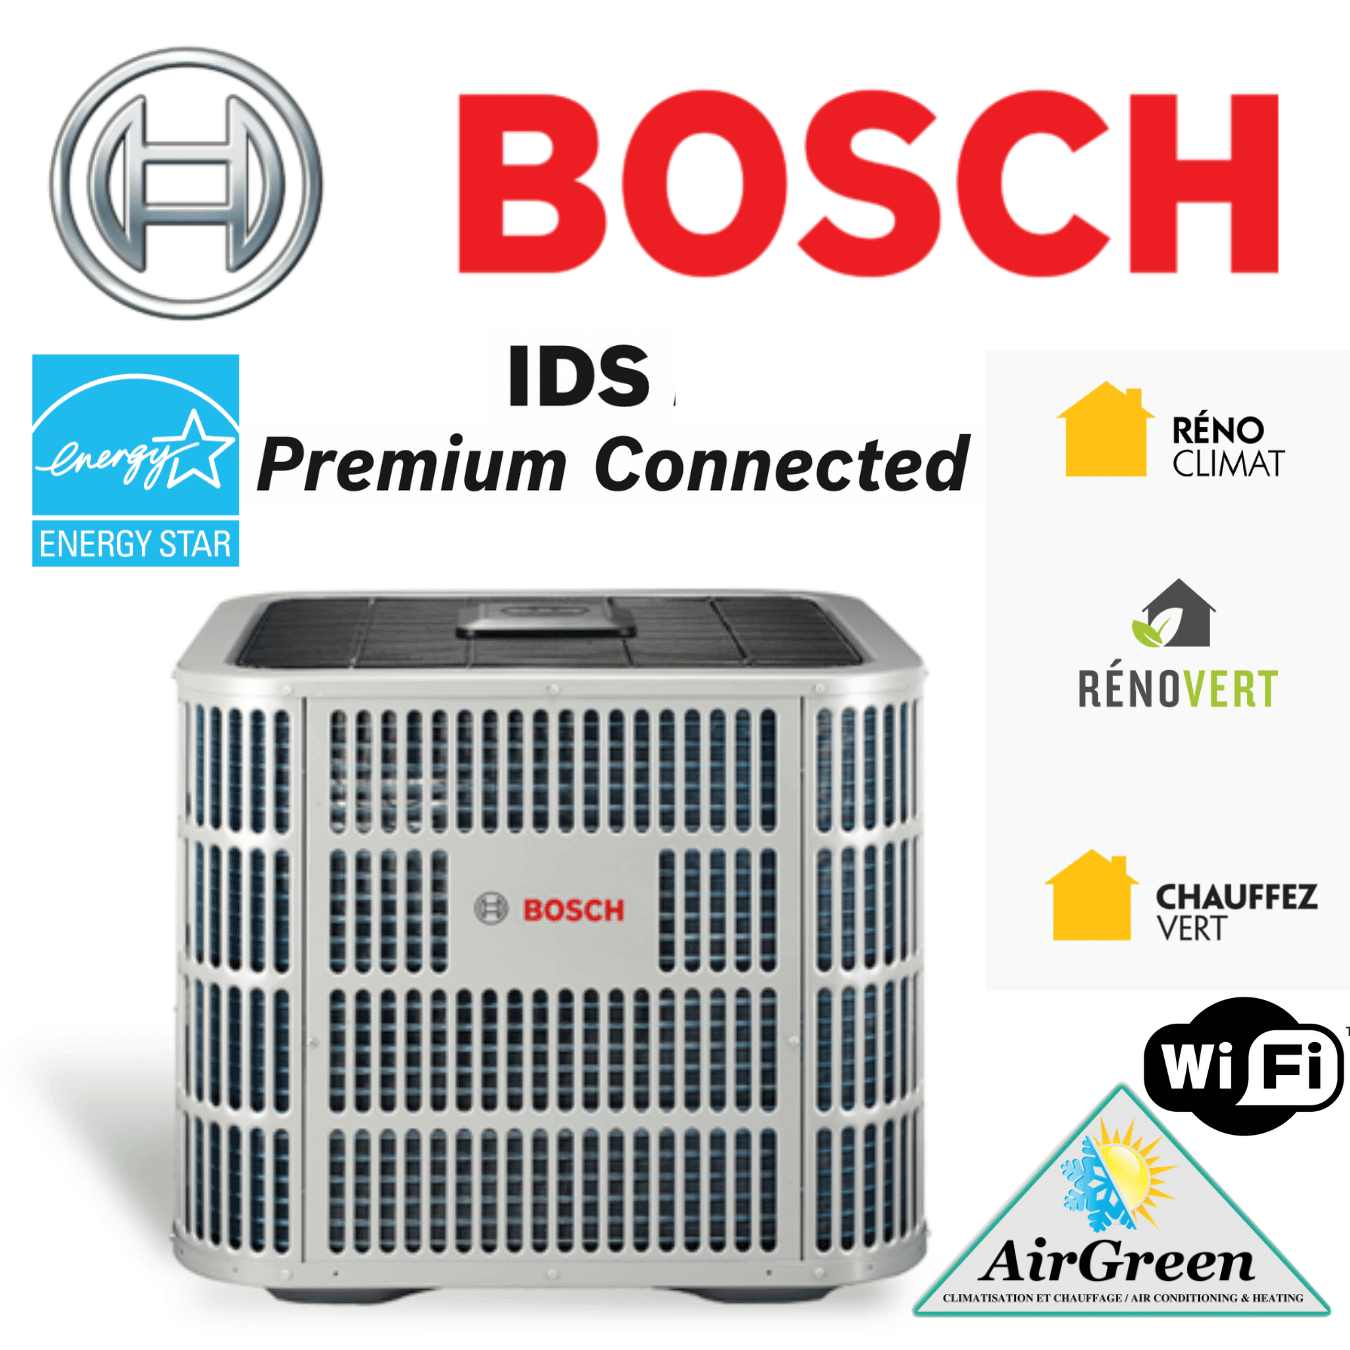 Thermopompe Centrale Bosch IDS 2.1 PREMIUM CONNECTED 5 Tonnes